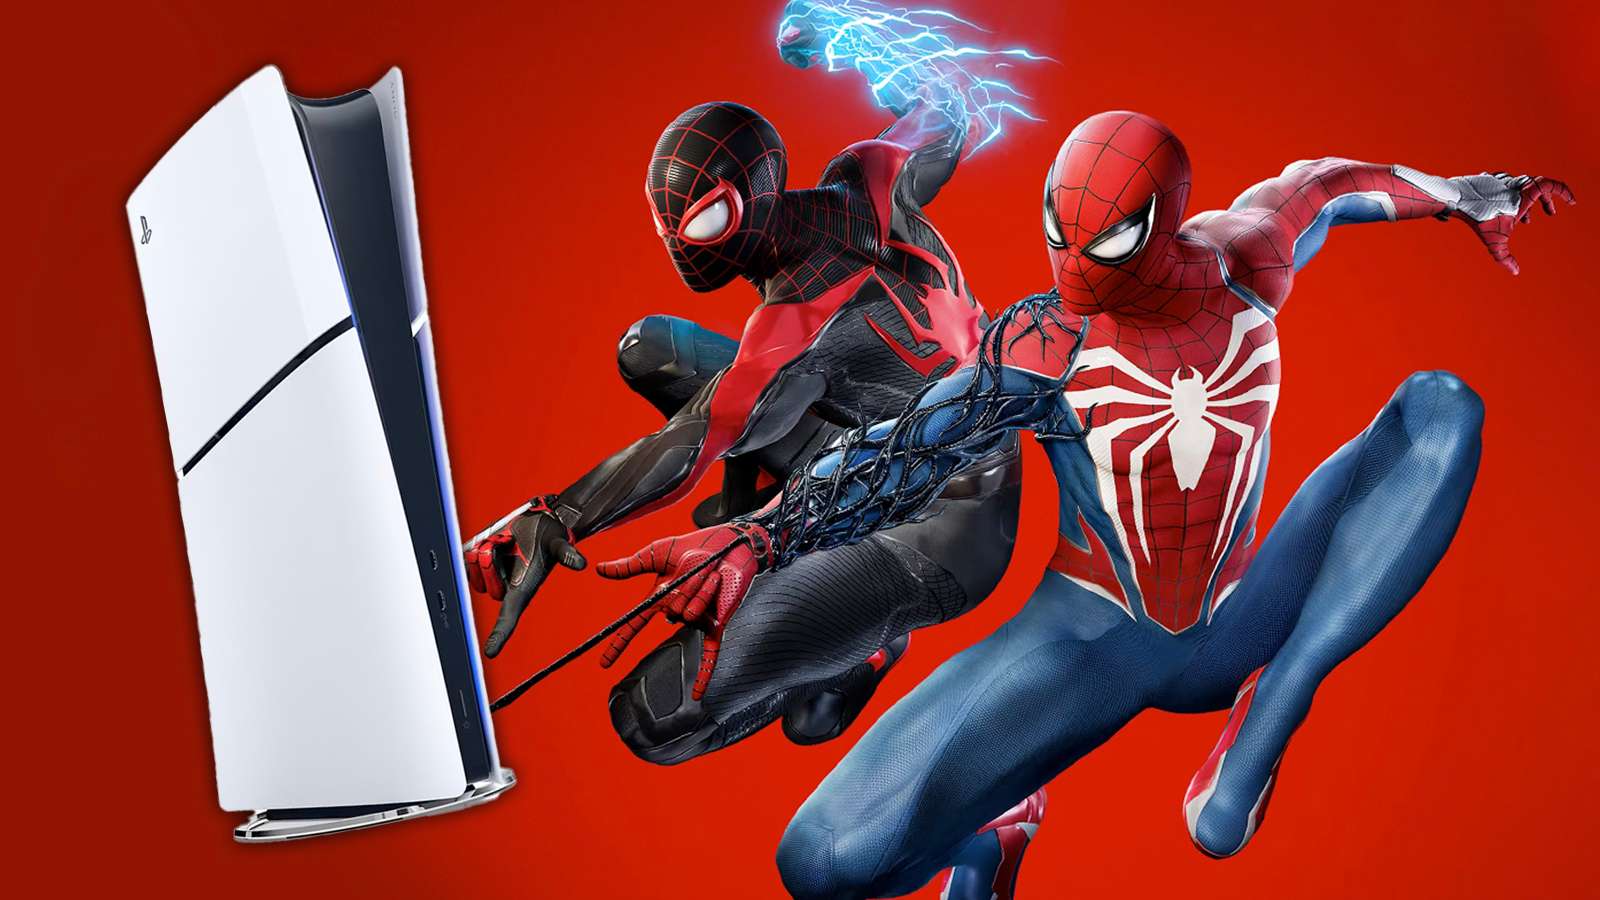 PS5 Slim Digital next to Spider-Man 2 figures